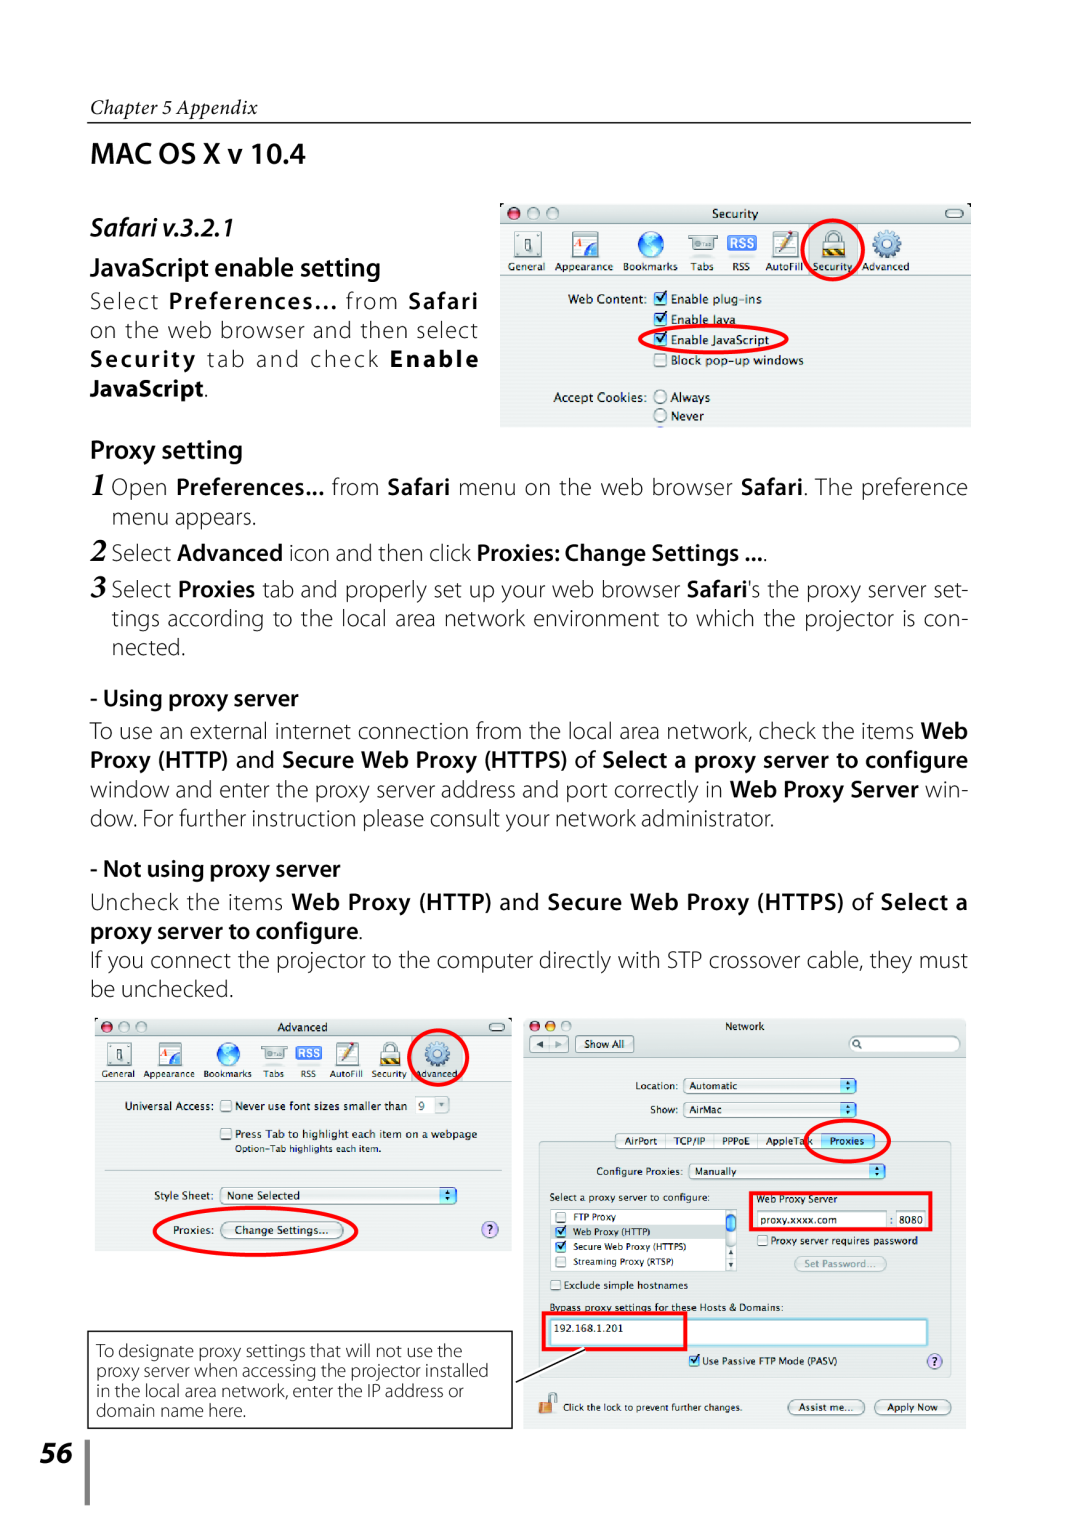 Sanyo Proj05 MAC OS X v, Safari, JavaScript enable setting, Select Advanced icon and then click Proxies Change Settings 